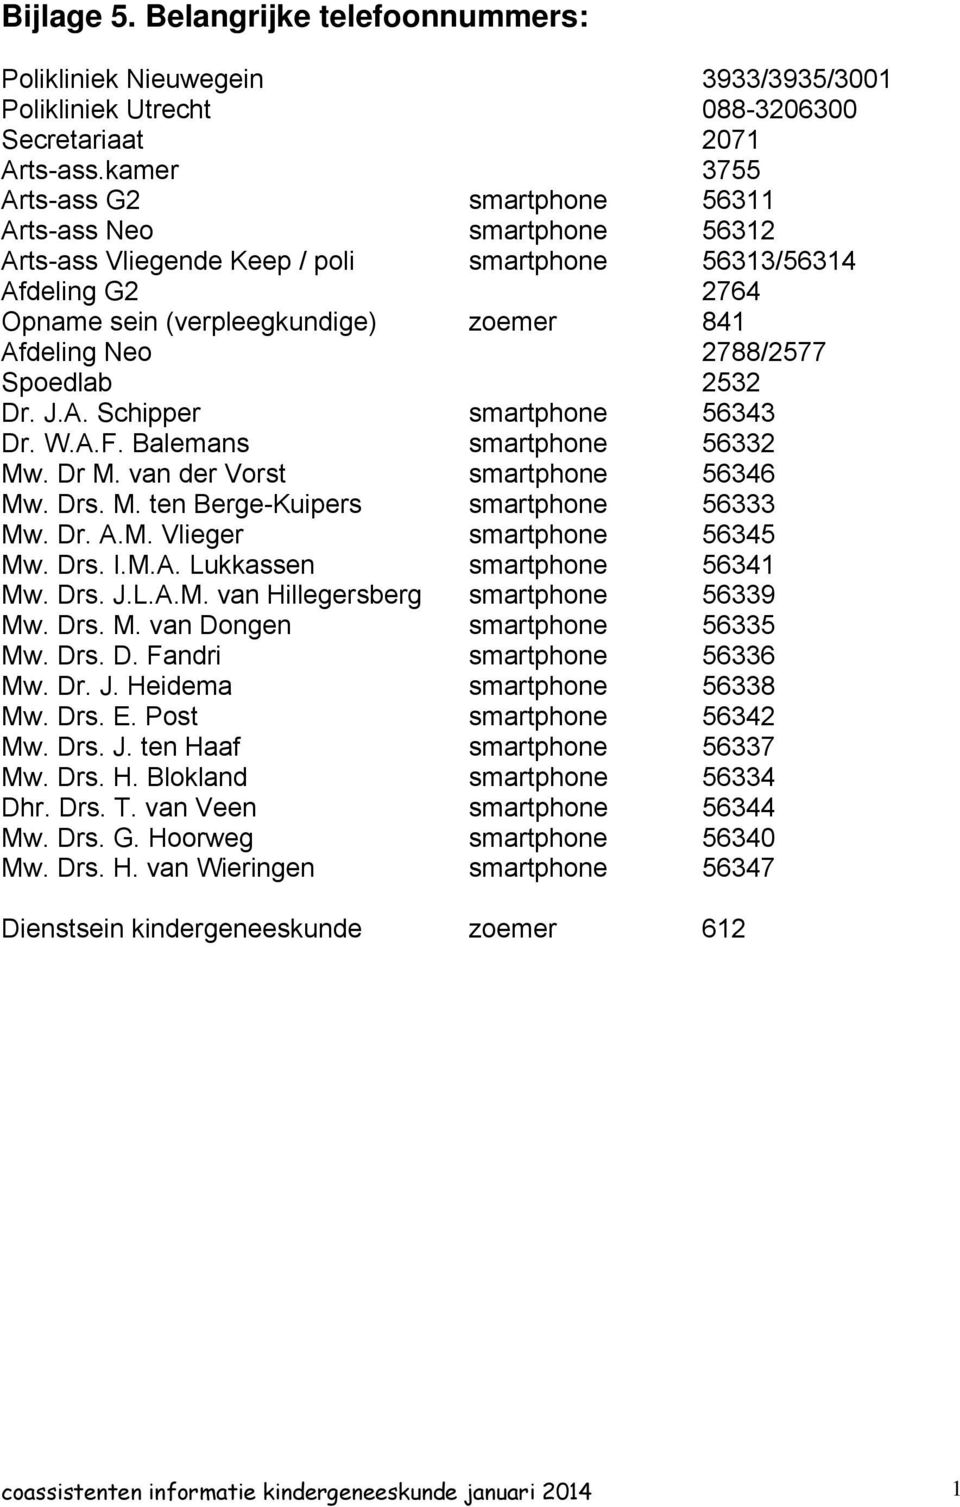 2788/2577 Spoedlab 2532 Dr. J.A. Schipper smartphone 56343 Dr. W.A.F. Balemans smartphone 56332 Mw. Dr M. van der Vorst smartphone 56346 Mw. Drs. M. ten Berge-Kuipers smartphone 56333 Mw. Dr. A.M. Vlieger smartphone 56345 Mw.